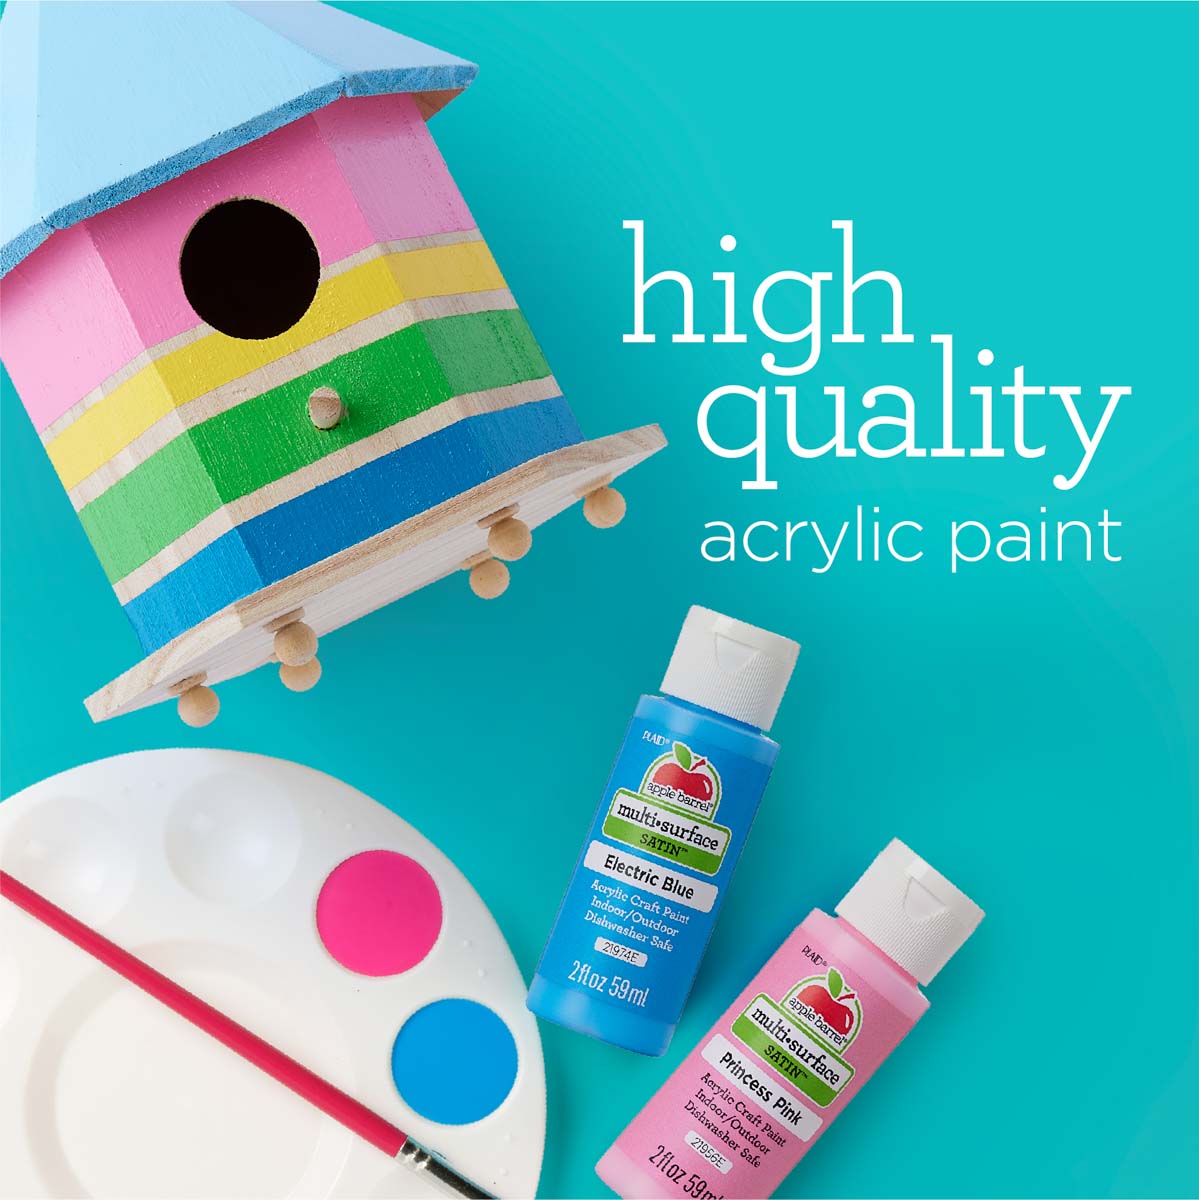 Apple Barrel ® Multi-Surface Satin Acrylic Paints - Atlantis, 2 oz. - 21971E